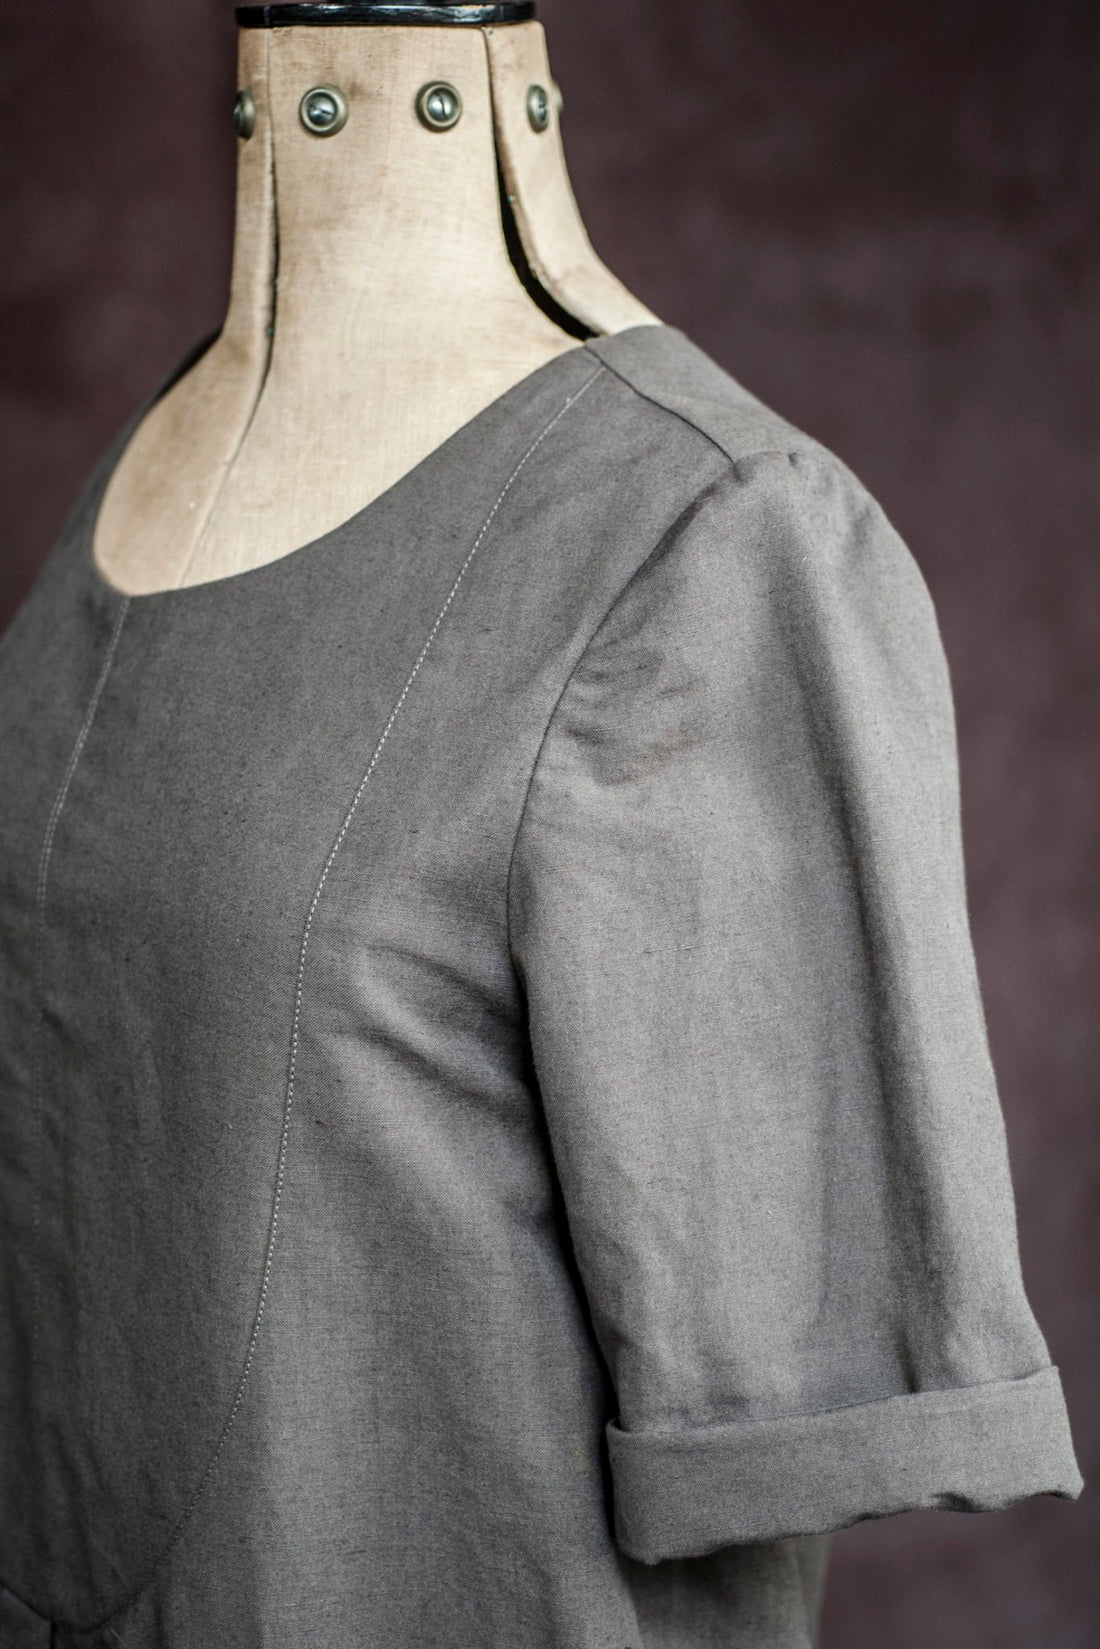 Shirt dress pattern by Merchant & Mills 